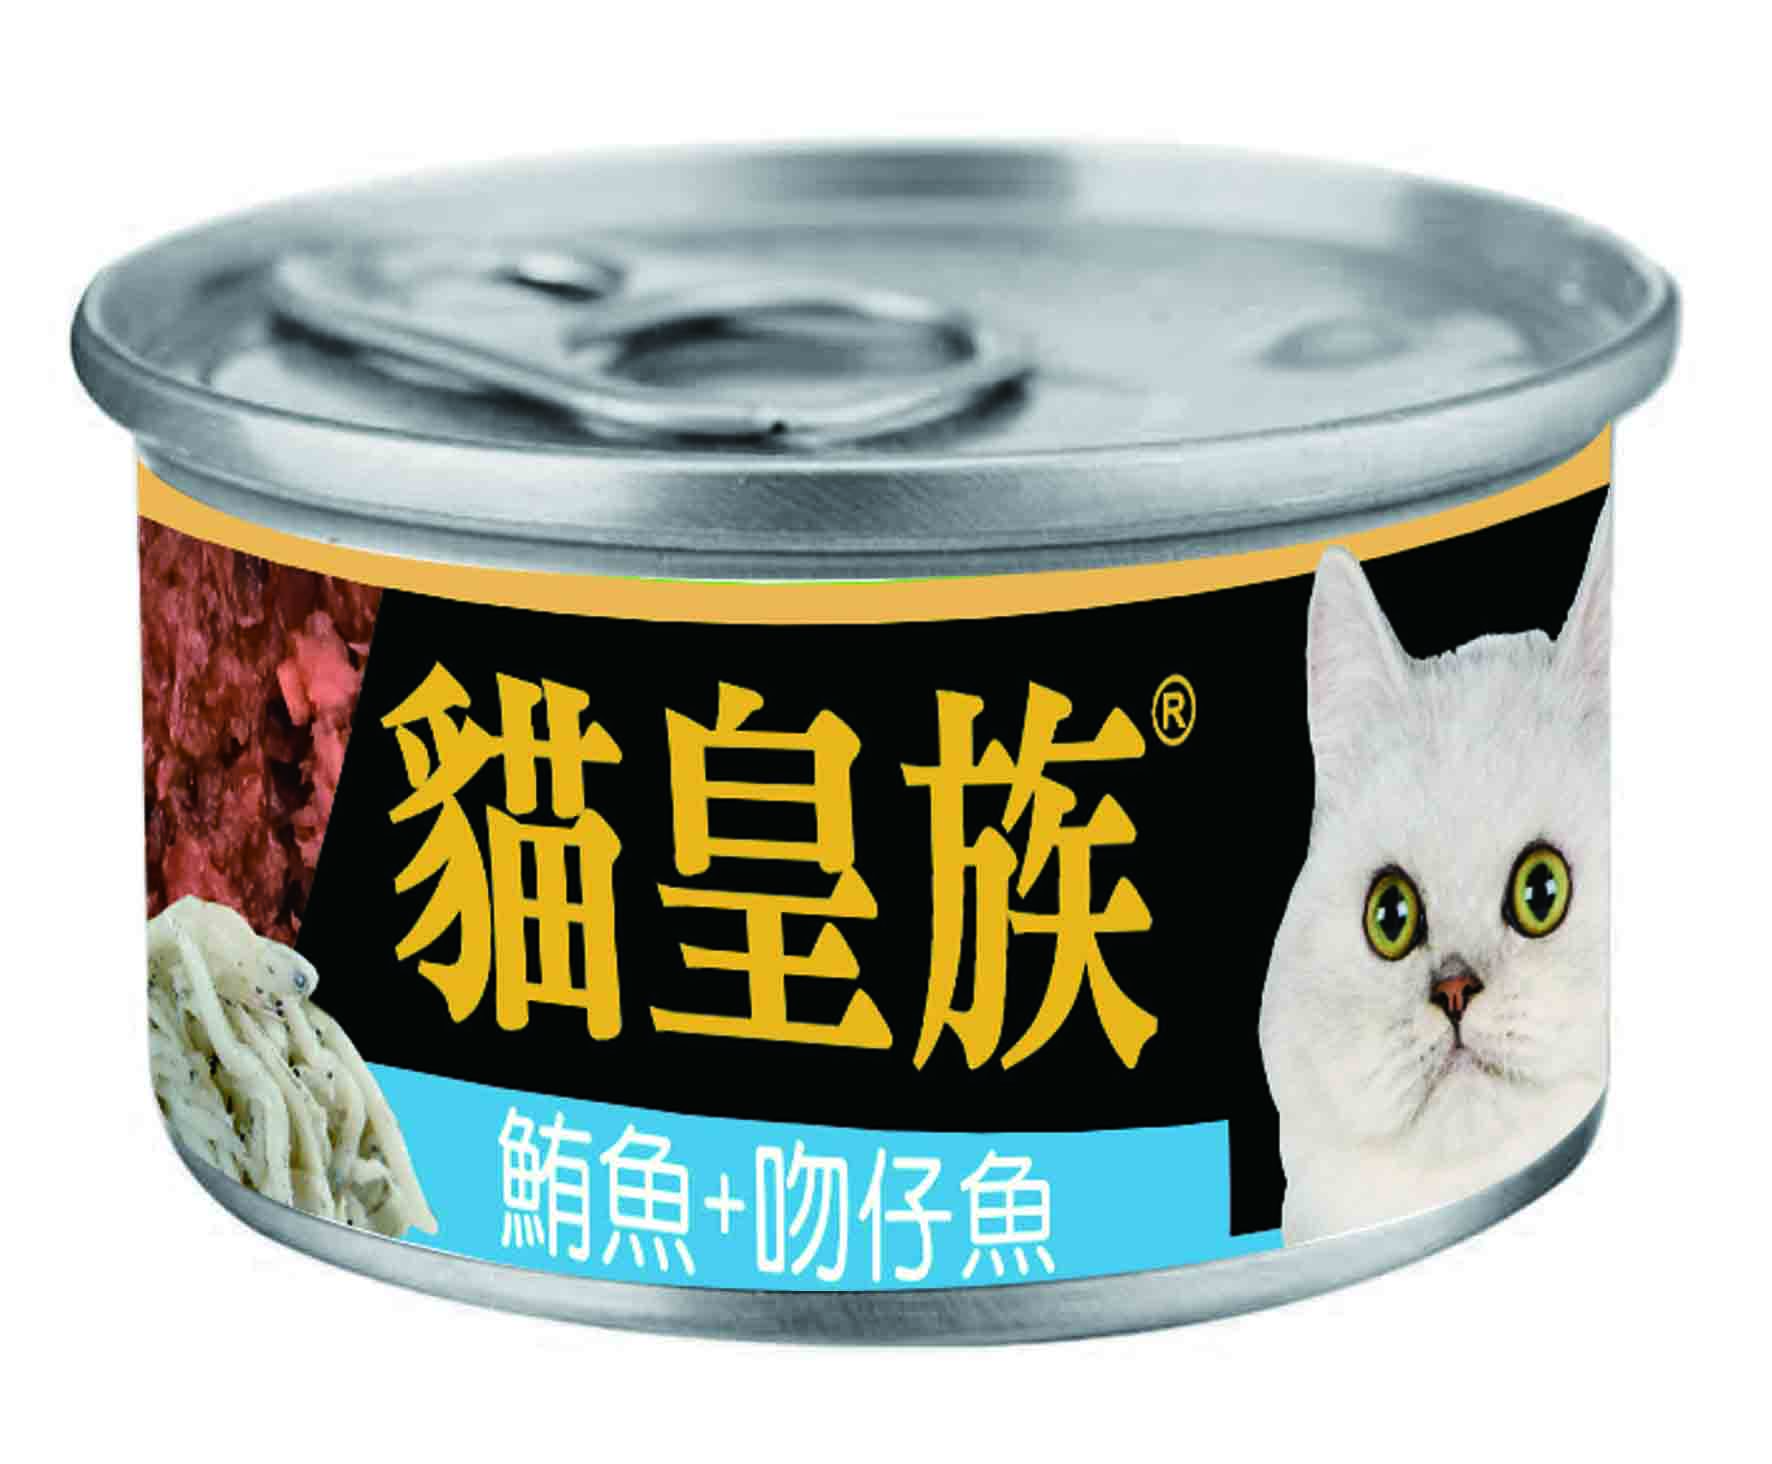 貓皇族®大缶 鮪魚+吻仔魚 貓罐頭
Mao-Huang-Zu Big can Tuna red meat+ Shirasu